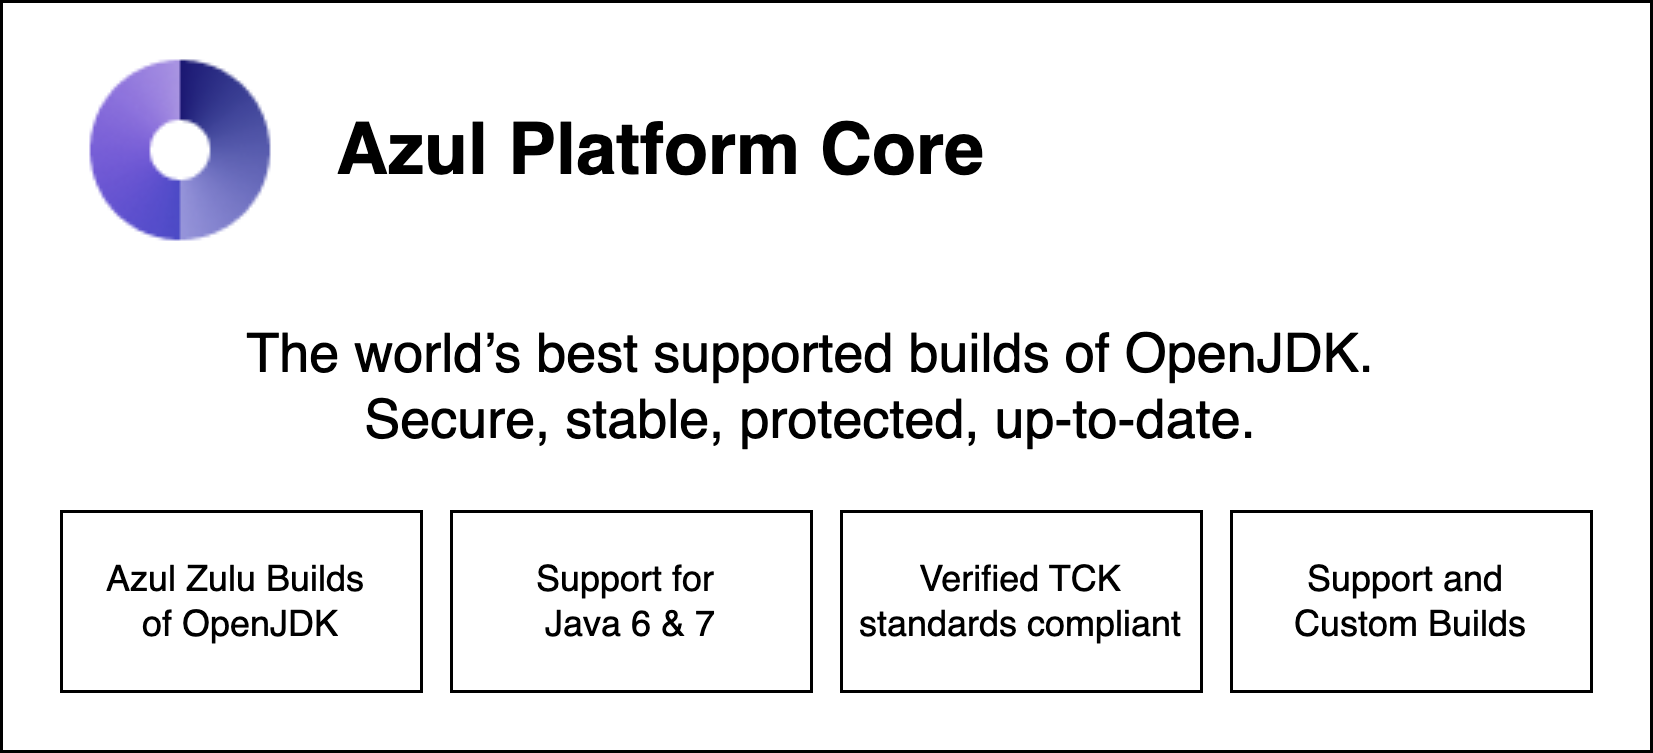 Overview of Azul Platform Core